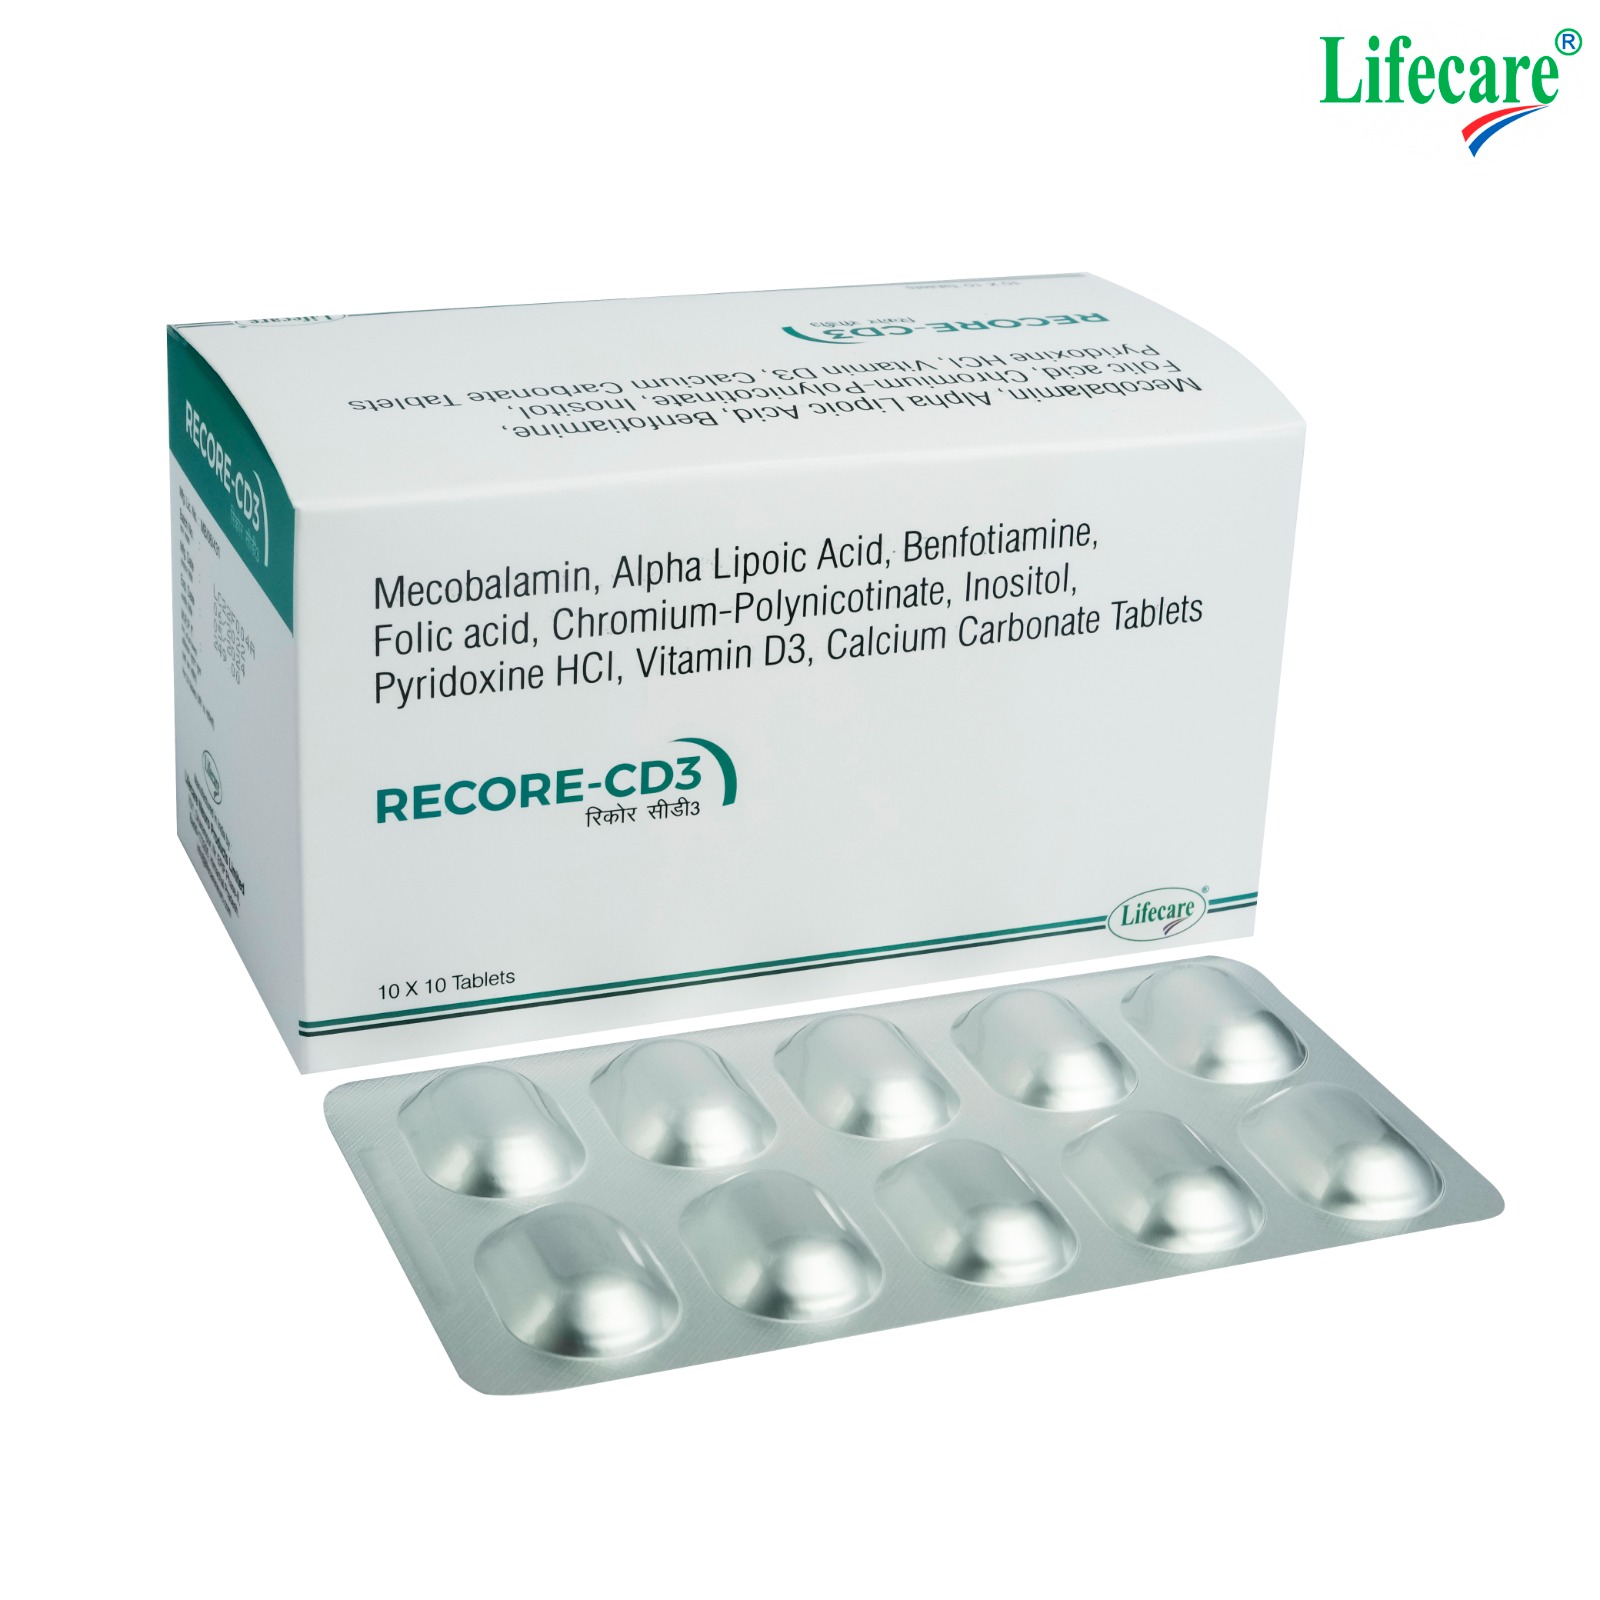 Mecobalamin, Alpha Lipoic Acid, Benfotiamine, Folic acid, Chromium-Polynicotinate, Inositol, Pyridoxine HCI, Vitamin D3, and Calcium Carbonate Tablets